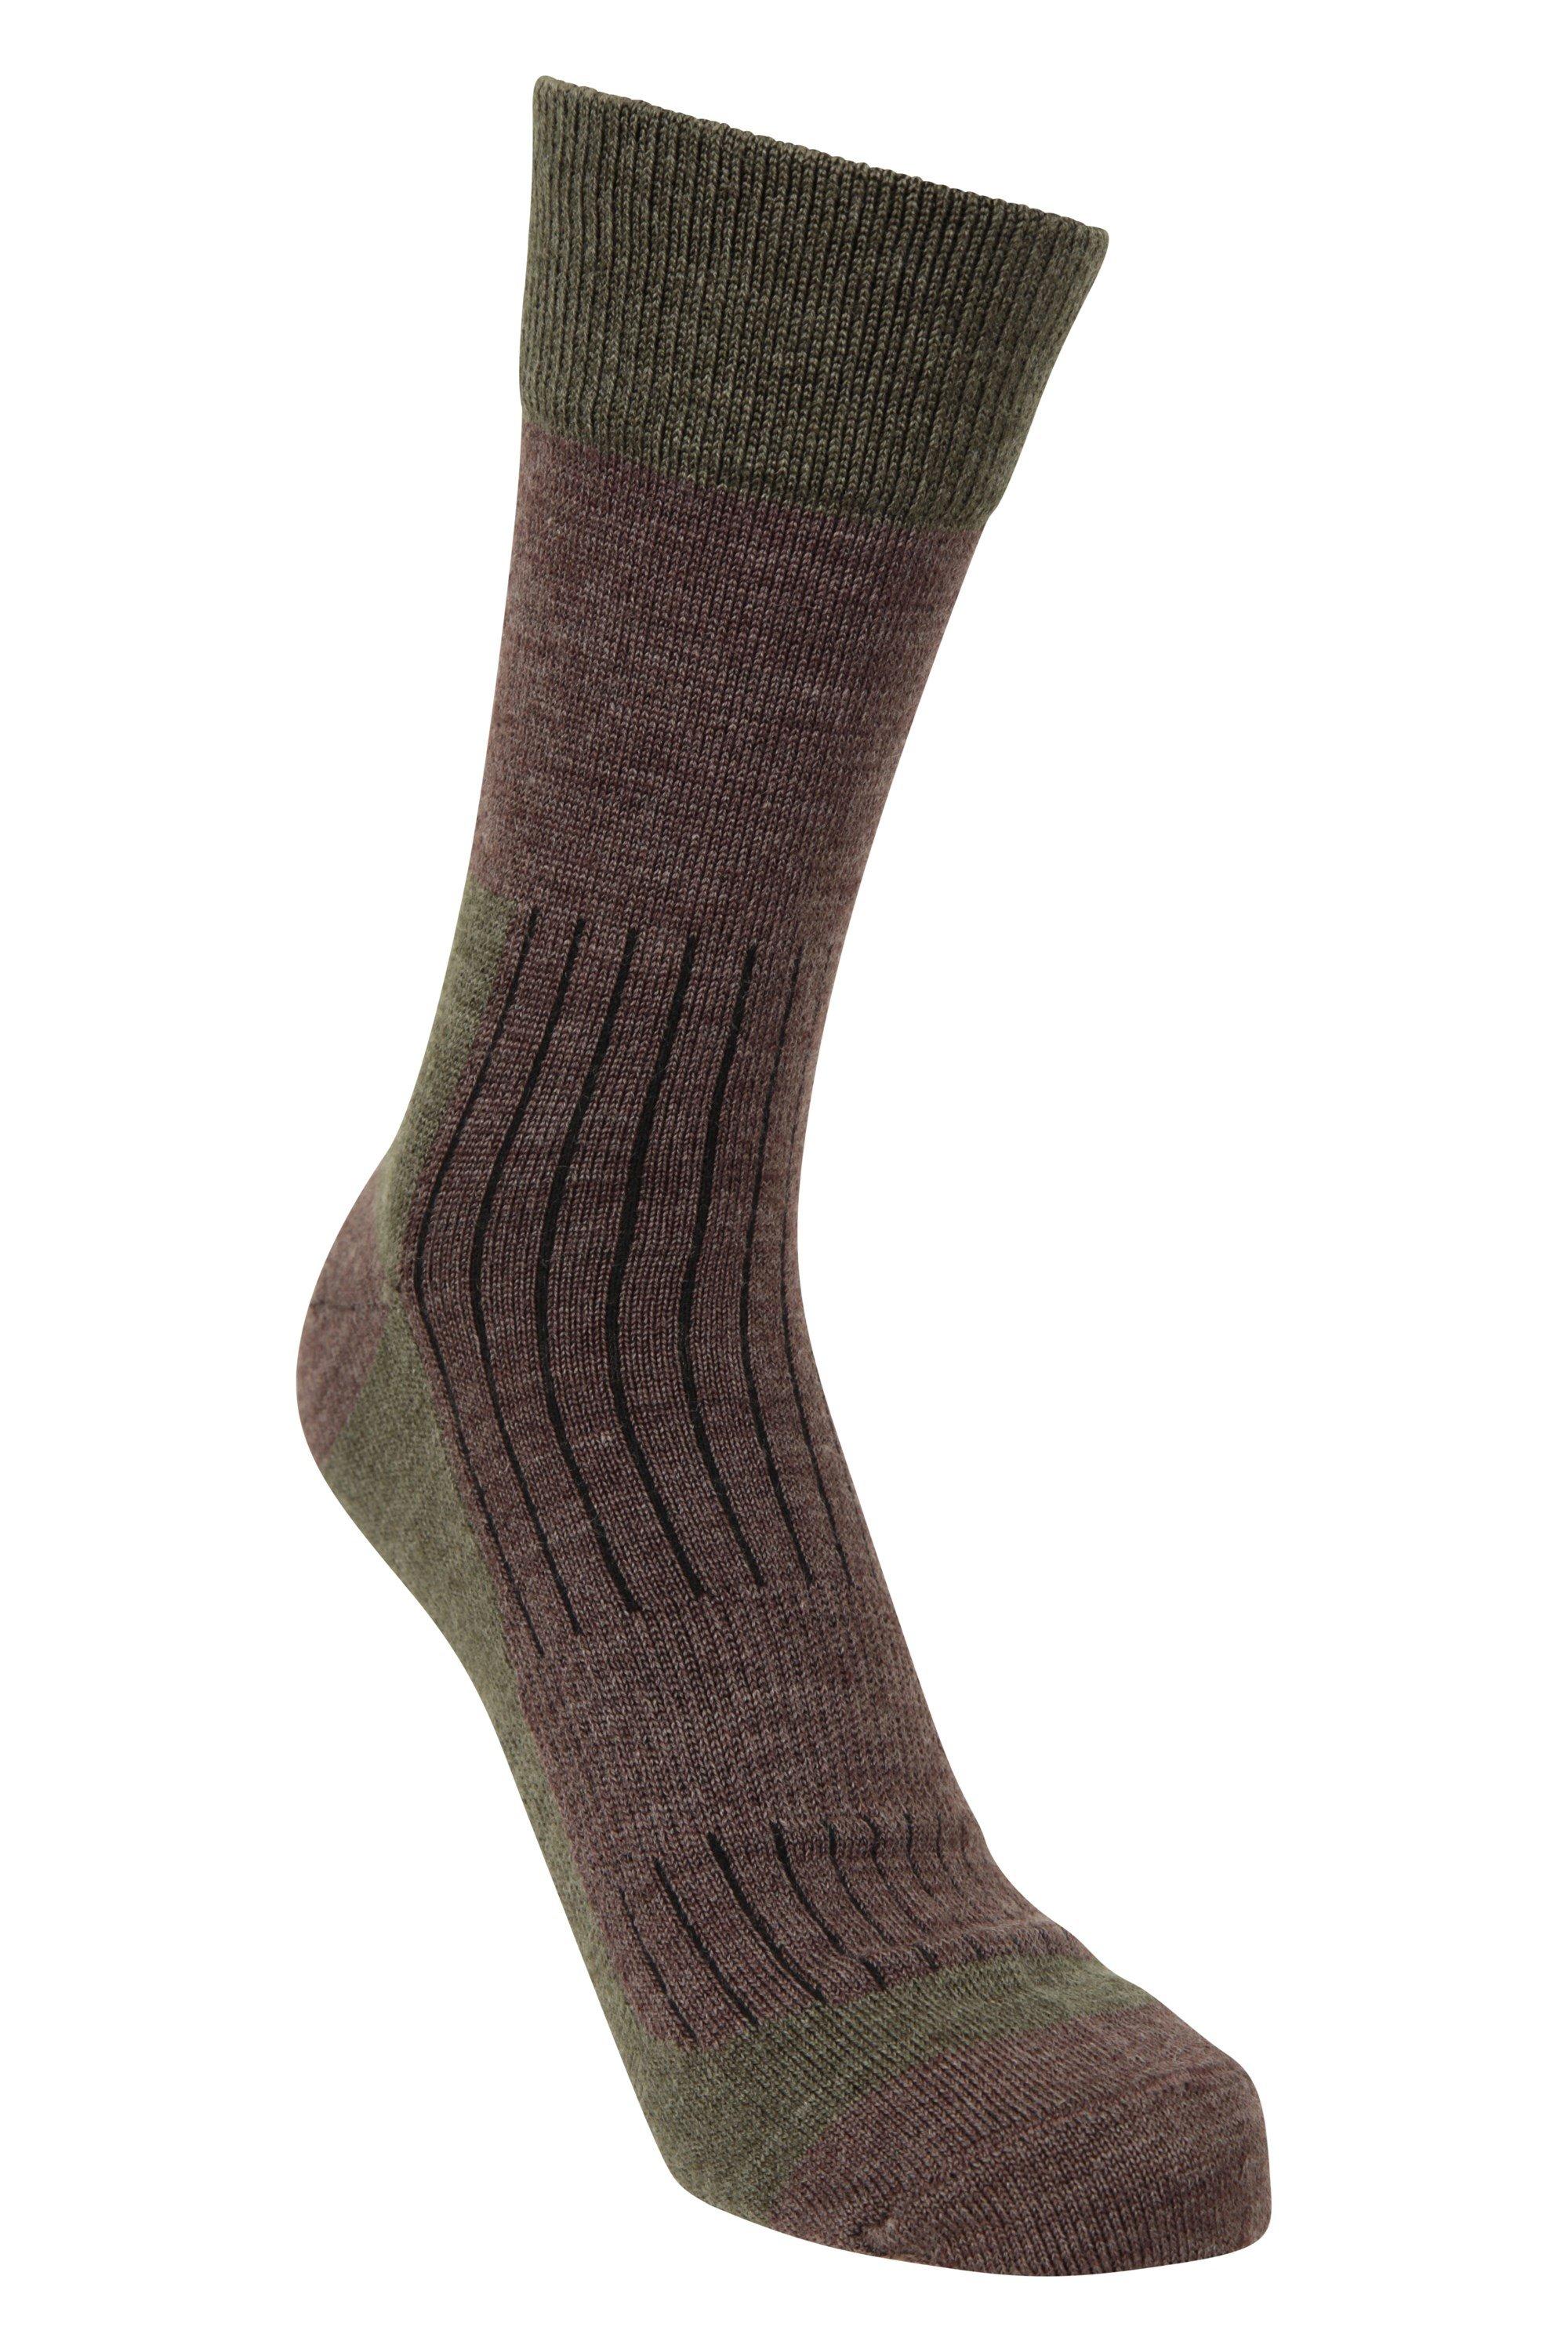 Merino Mid Calf Socks Lightweight, Durable & Breathable